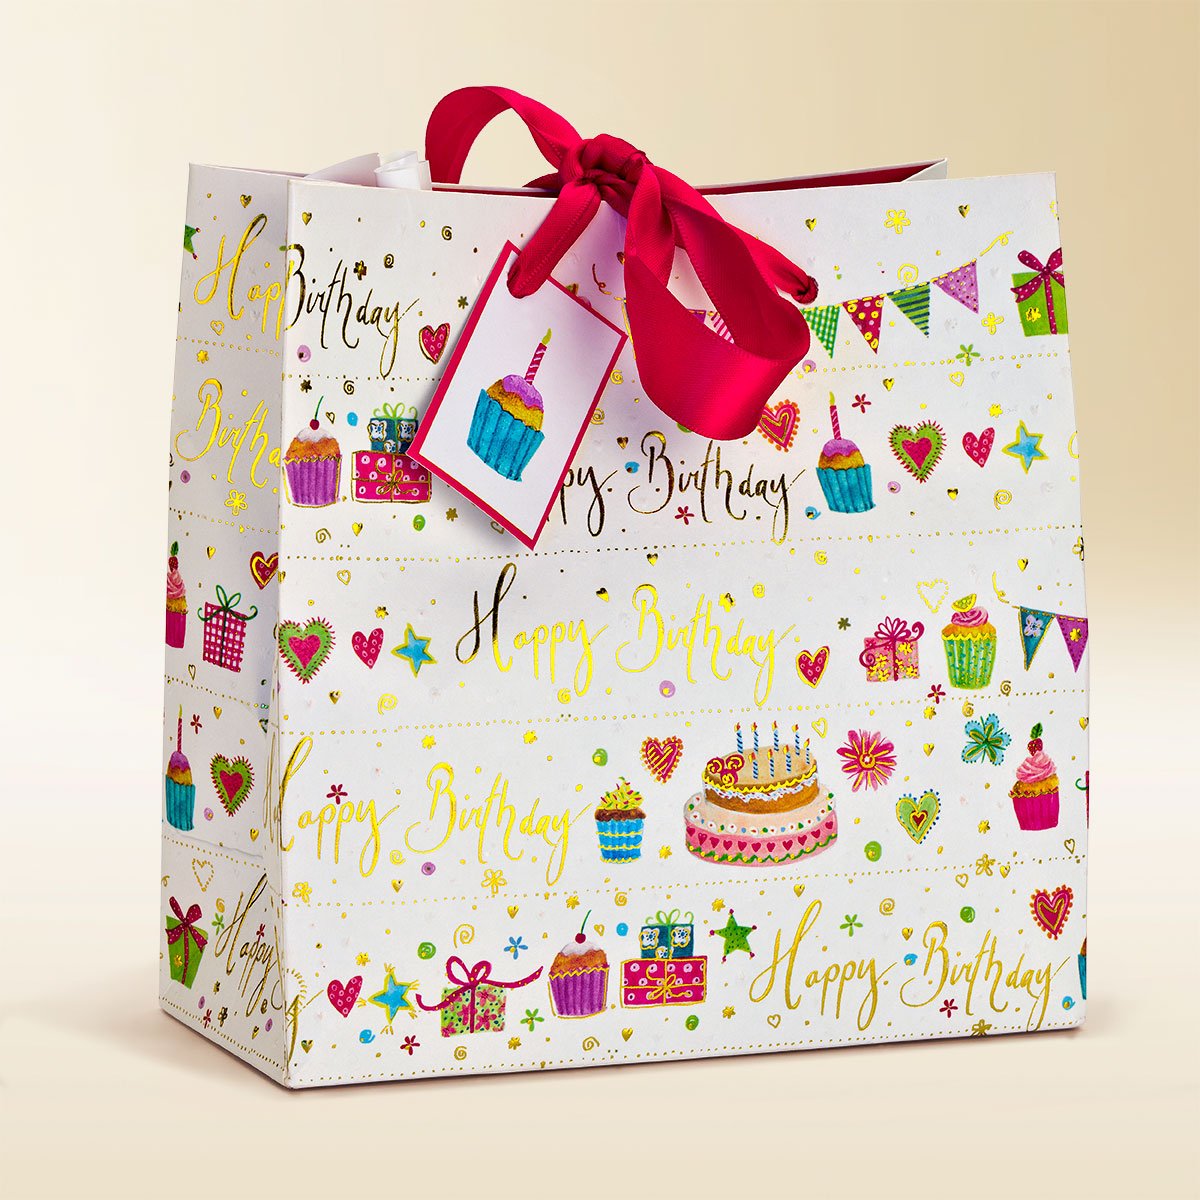 “Happy Birthday” gift bag assortment 340g